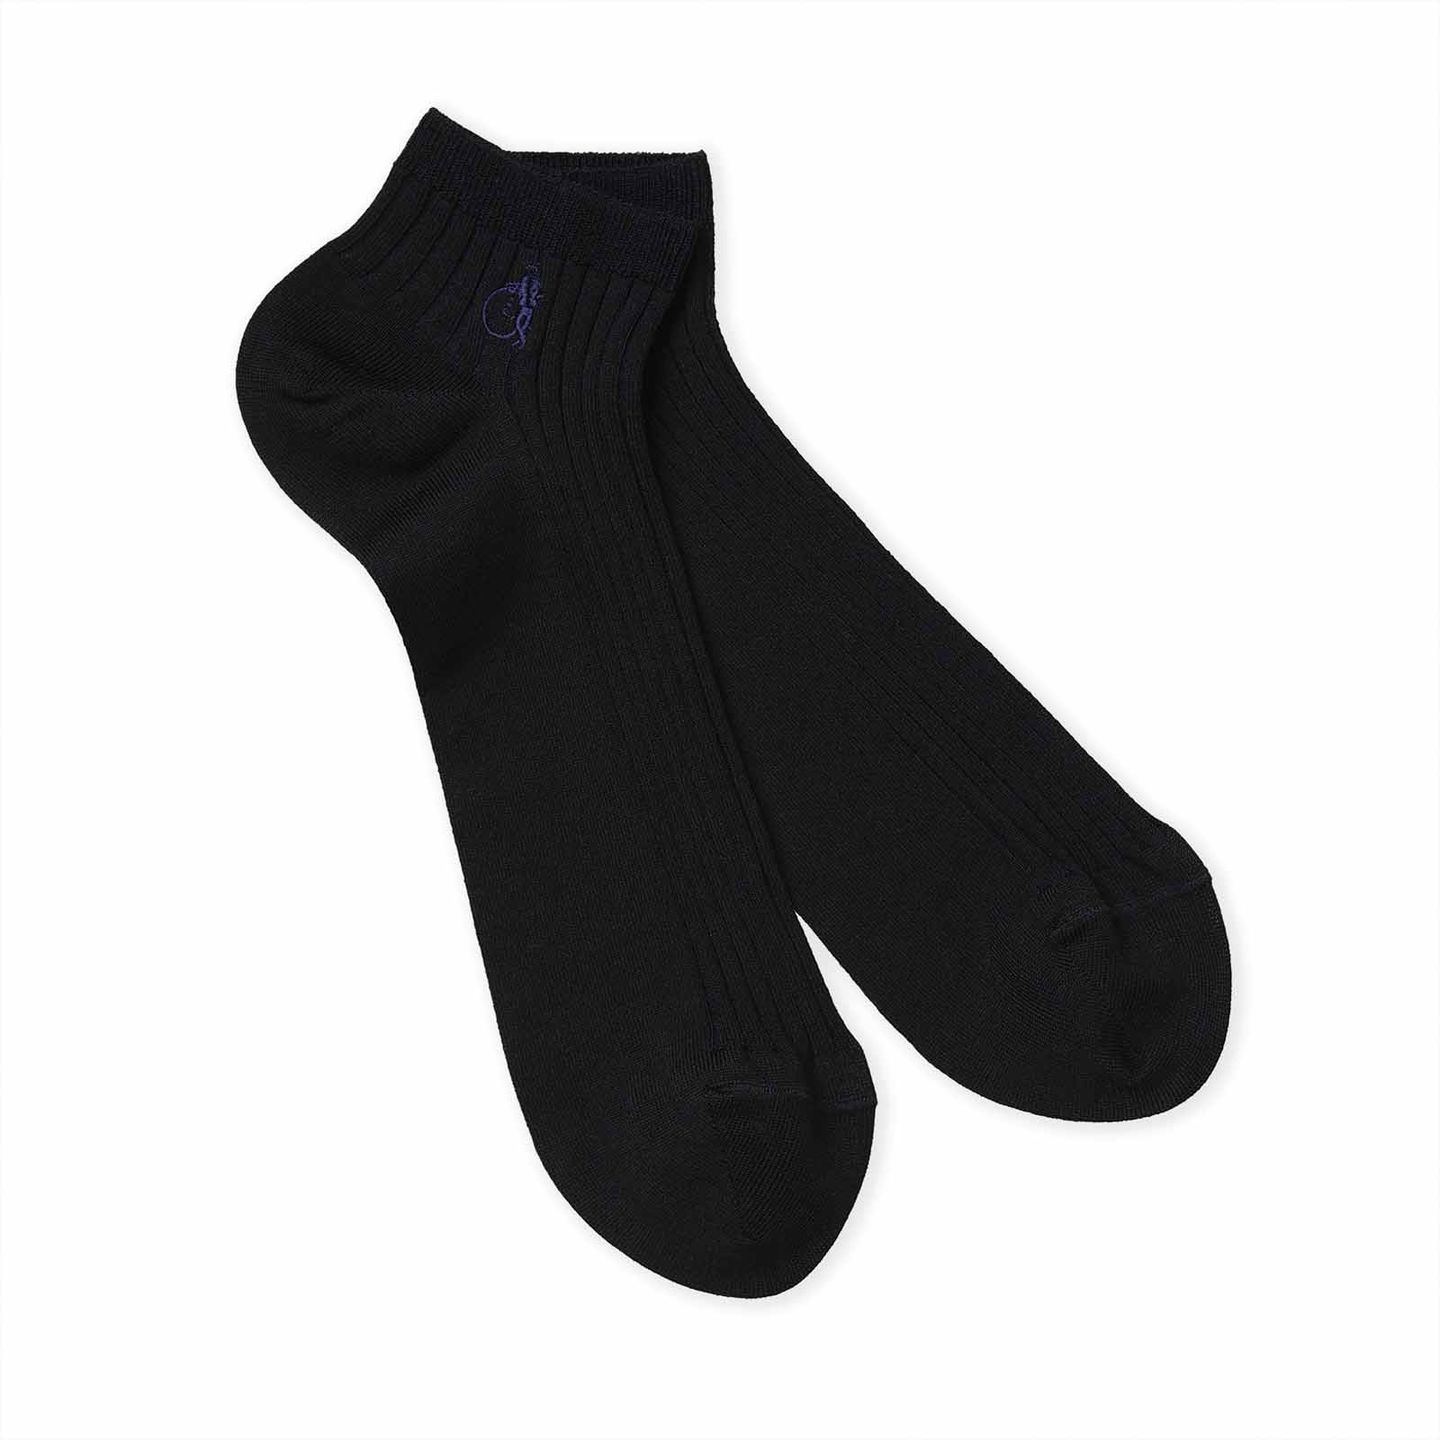 Short black socks